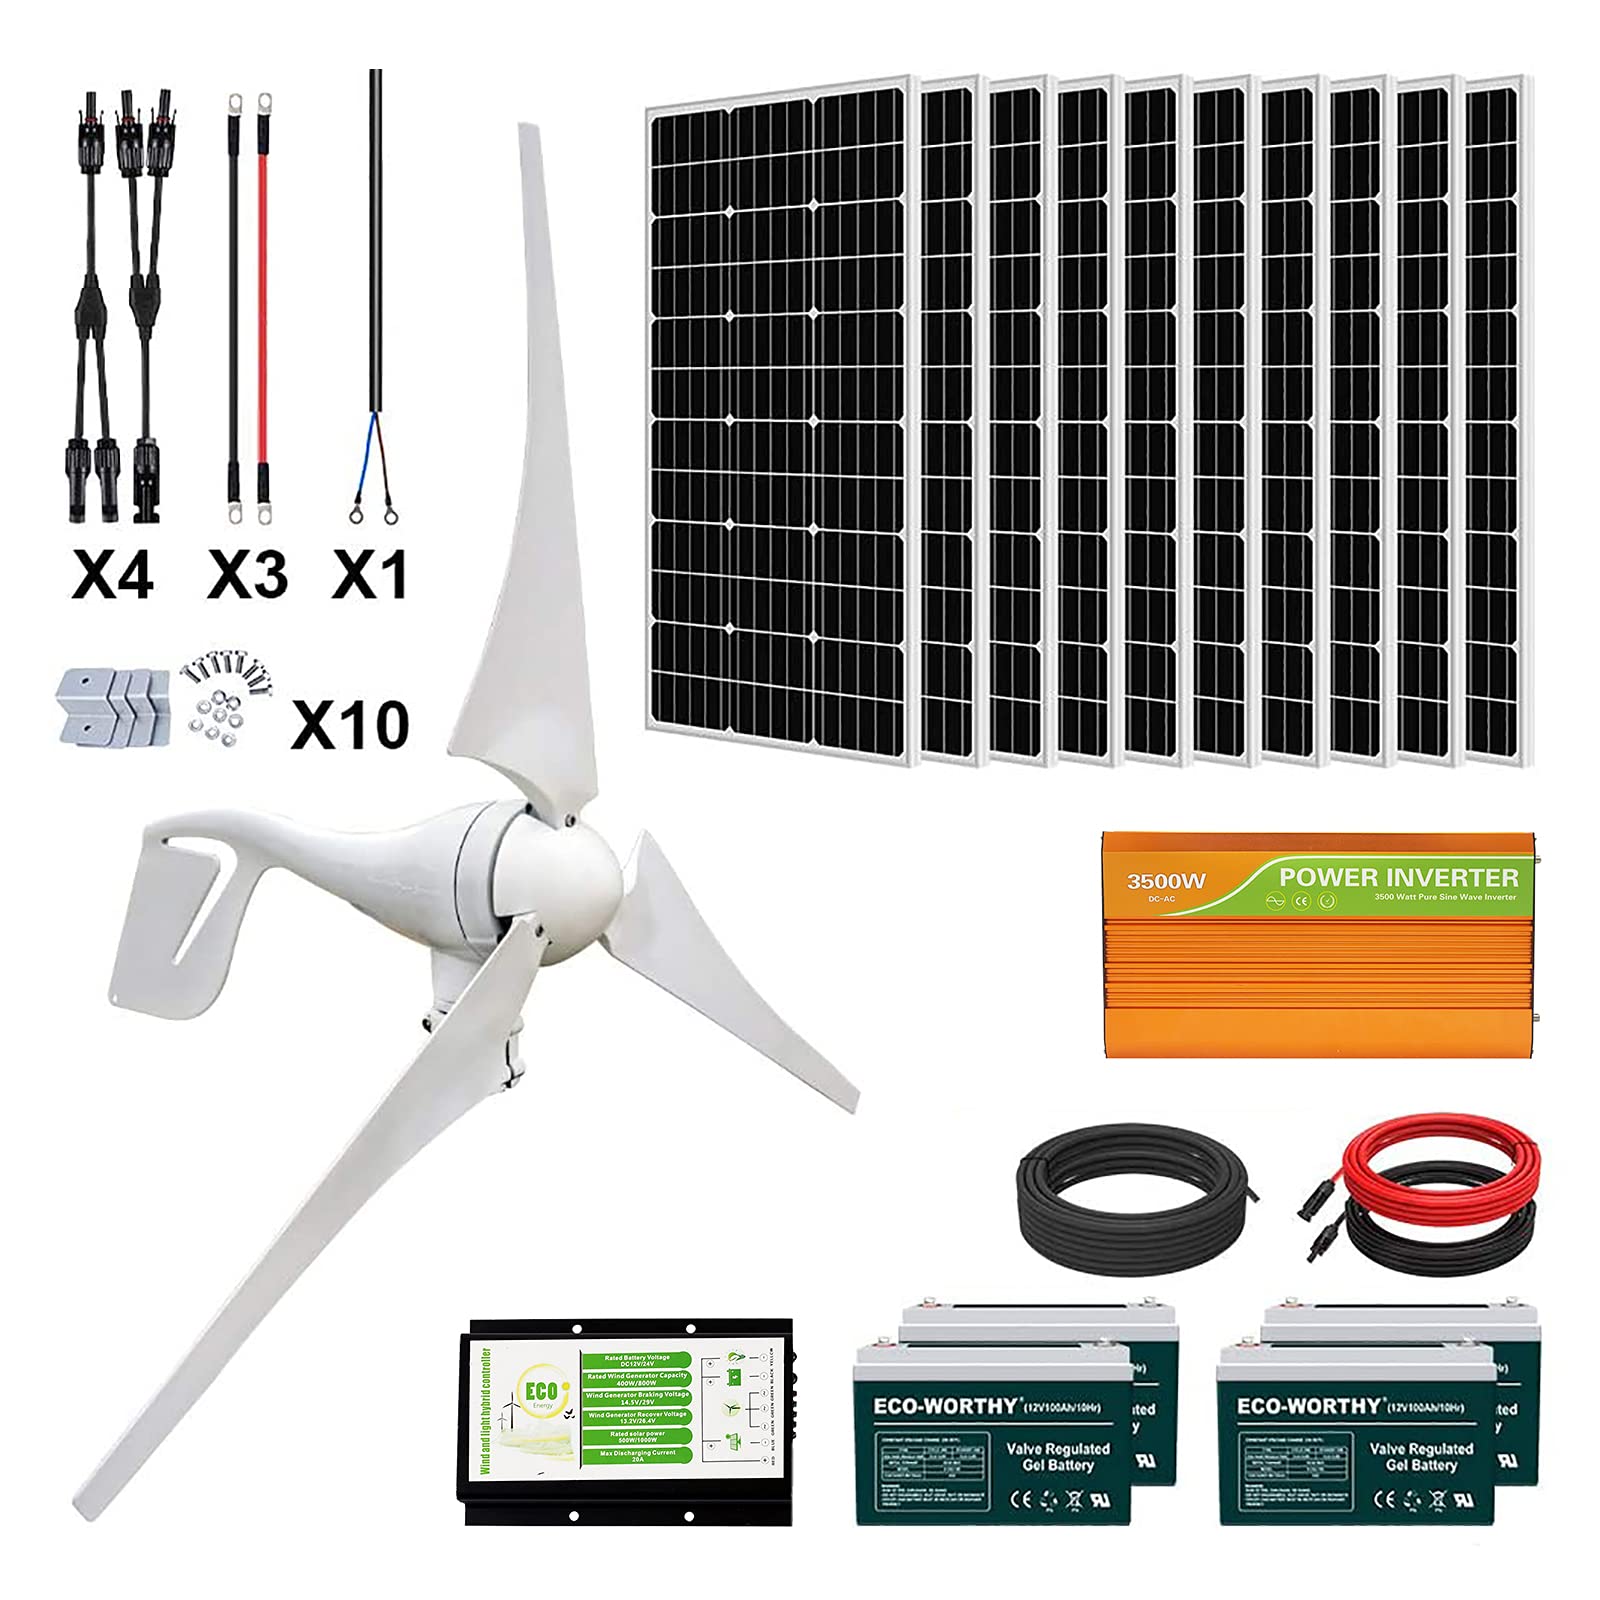 ECO-WORTHY 1400 Watts 24V Solar Wind Turbine Generator Kit